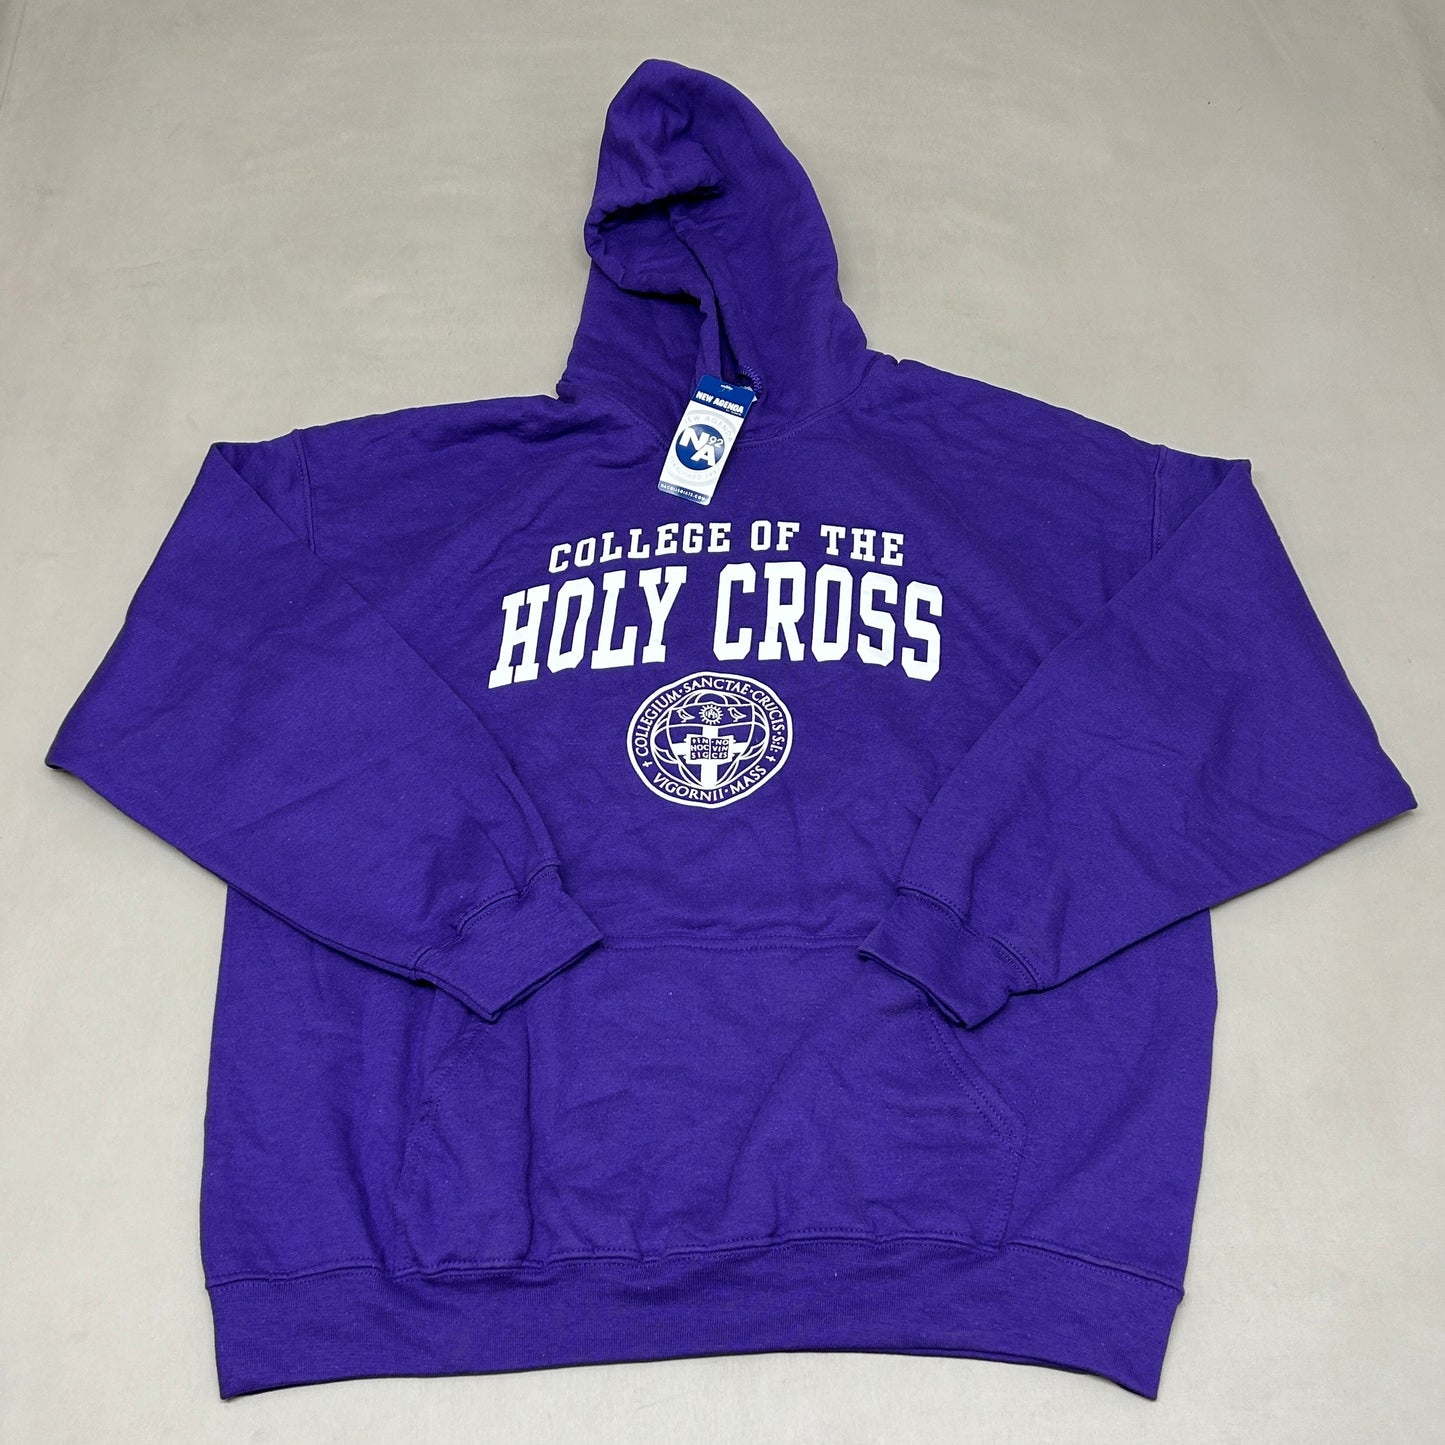 GILDAN College of the Holy Cross Heritage Hooded Sweatshirt Hoodie Unisex Sz XL Purple (New)